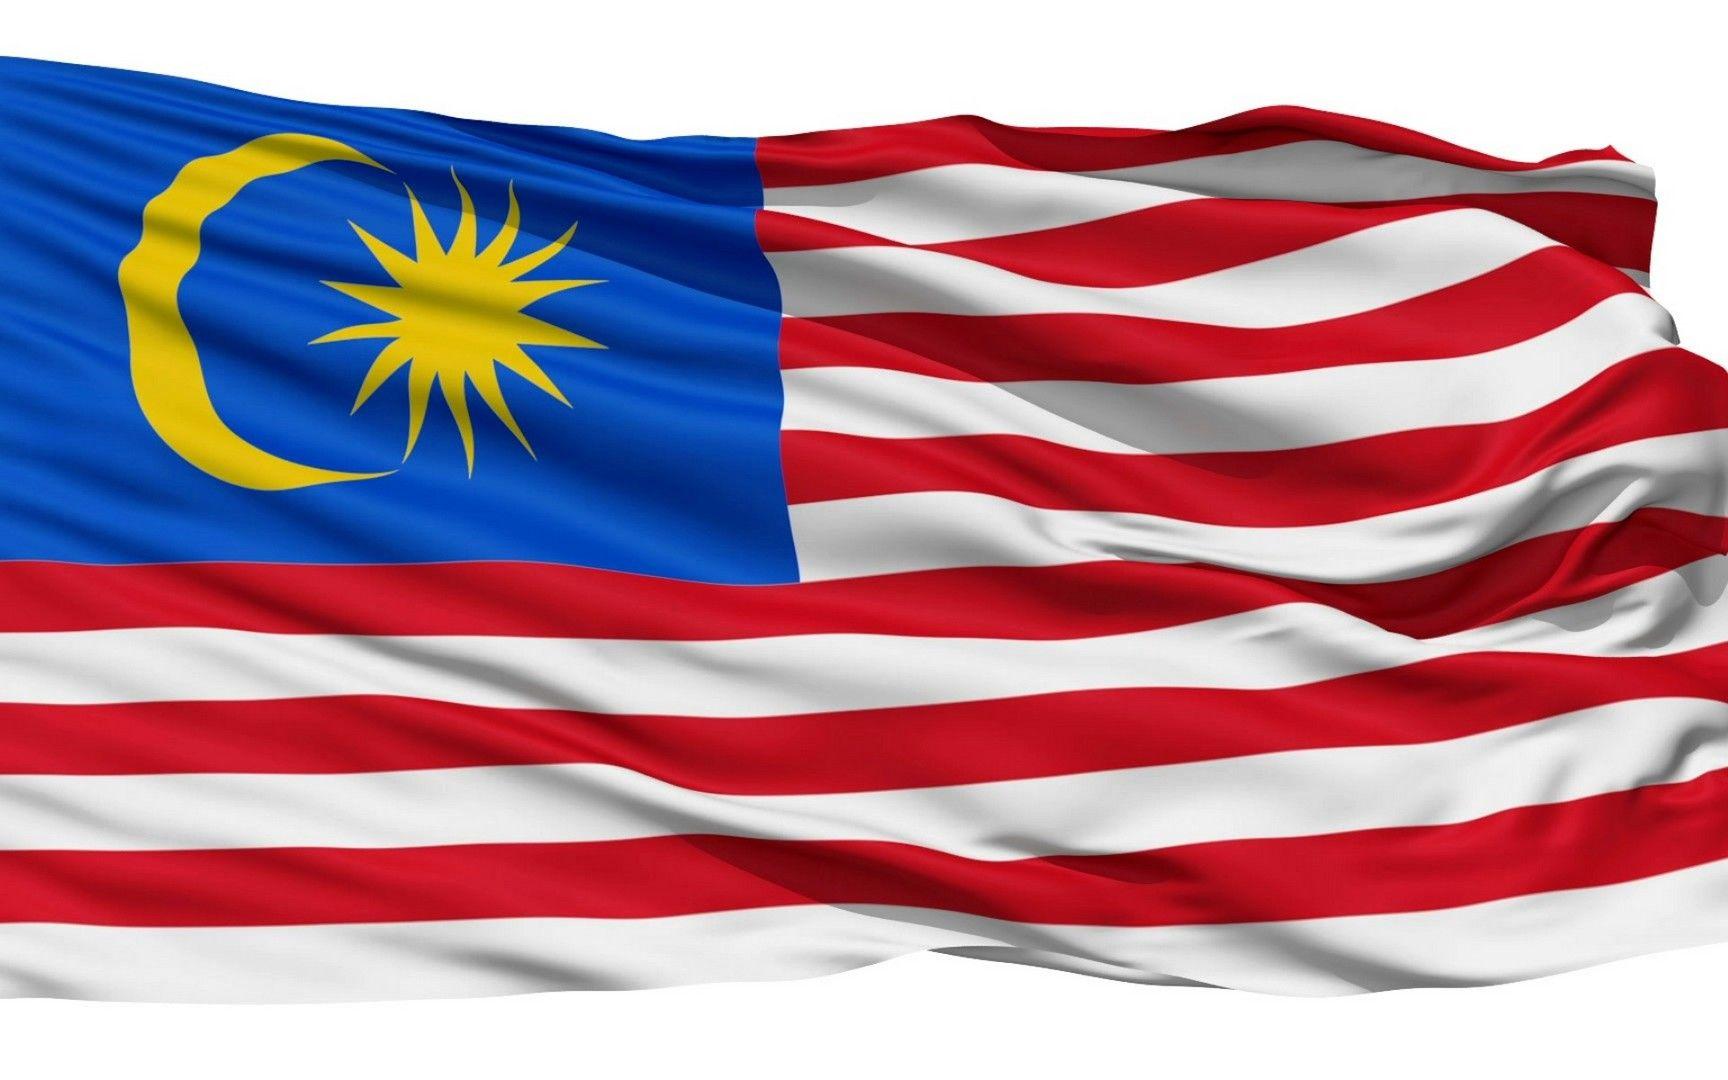 Flag of Malaysia wallpaper. Flags wallpaper. Malaysia